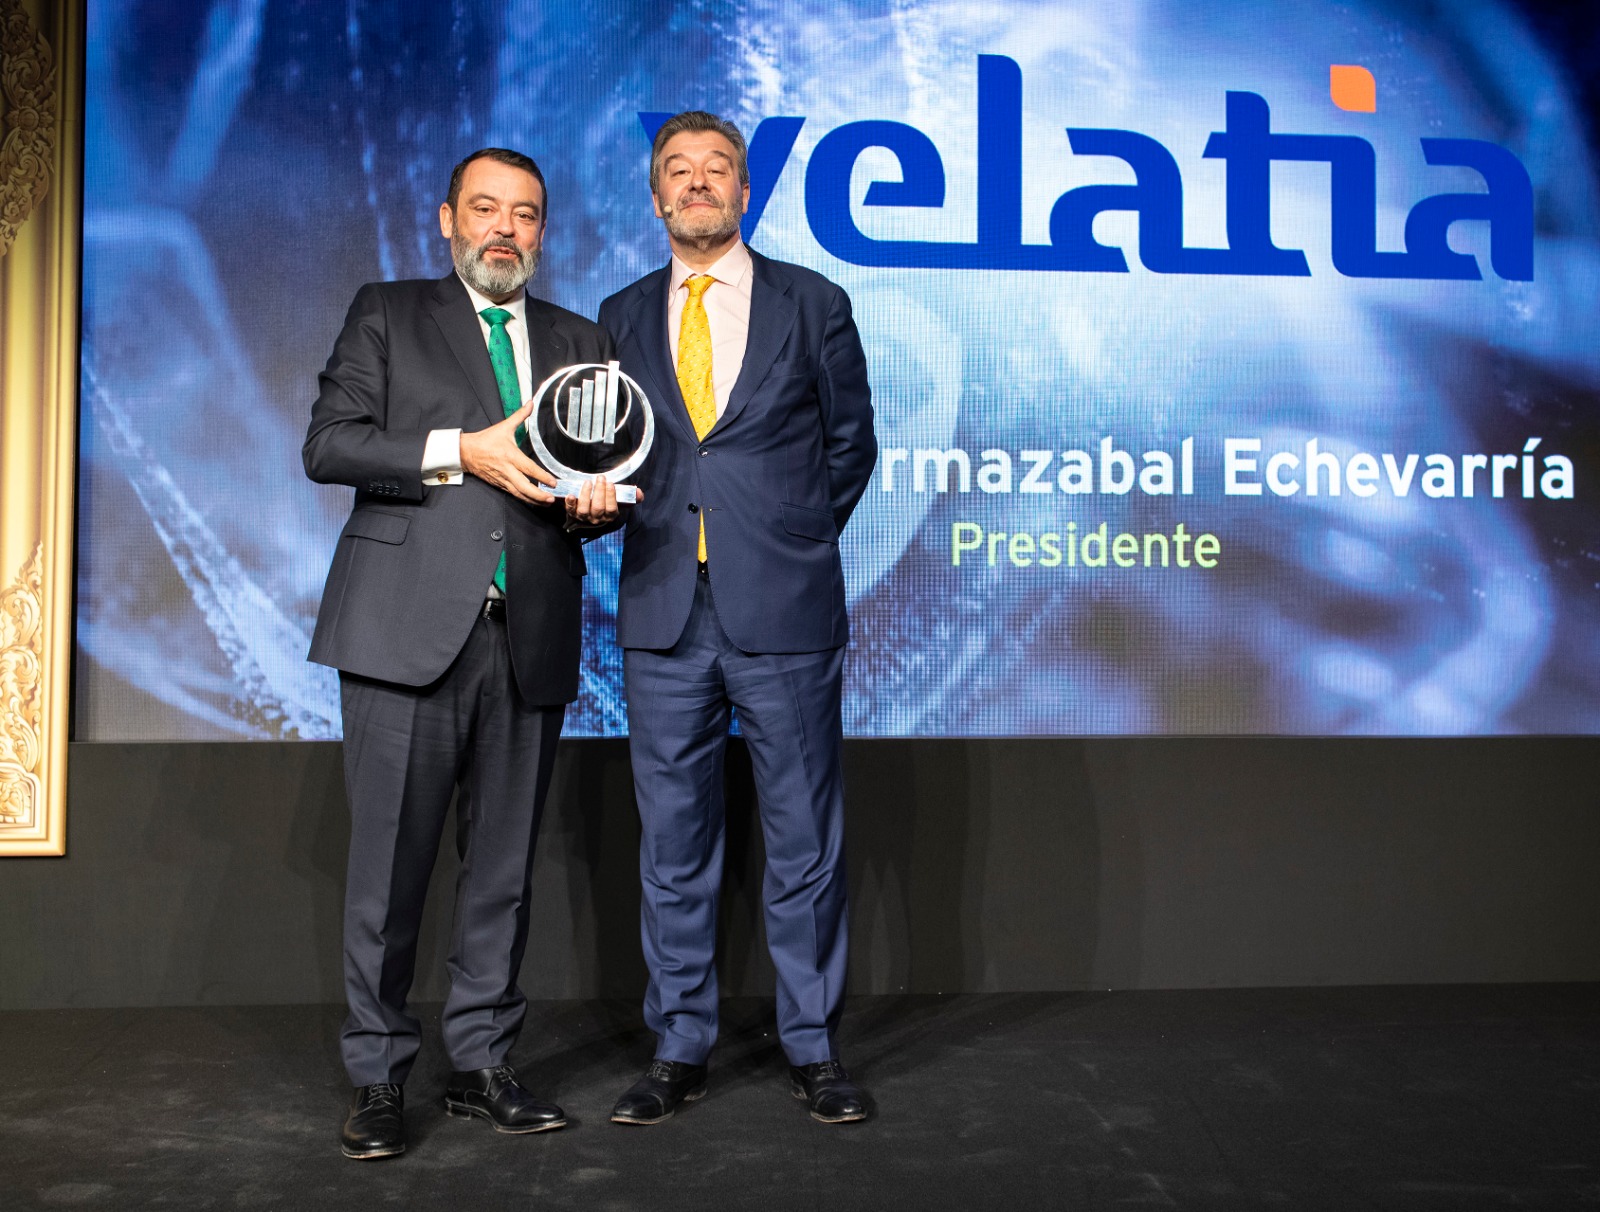 Javier Ormazabal, President of Velatia, was presented with the EY’s “Internationalisation Award”